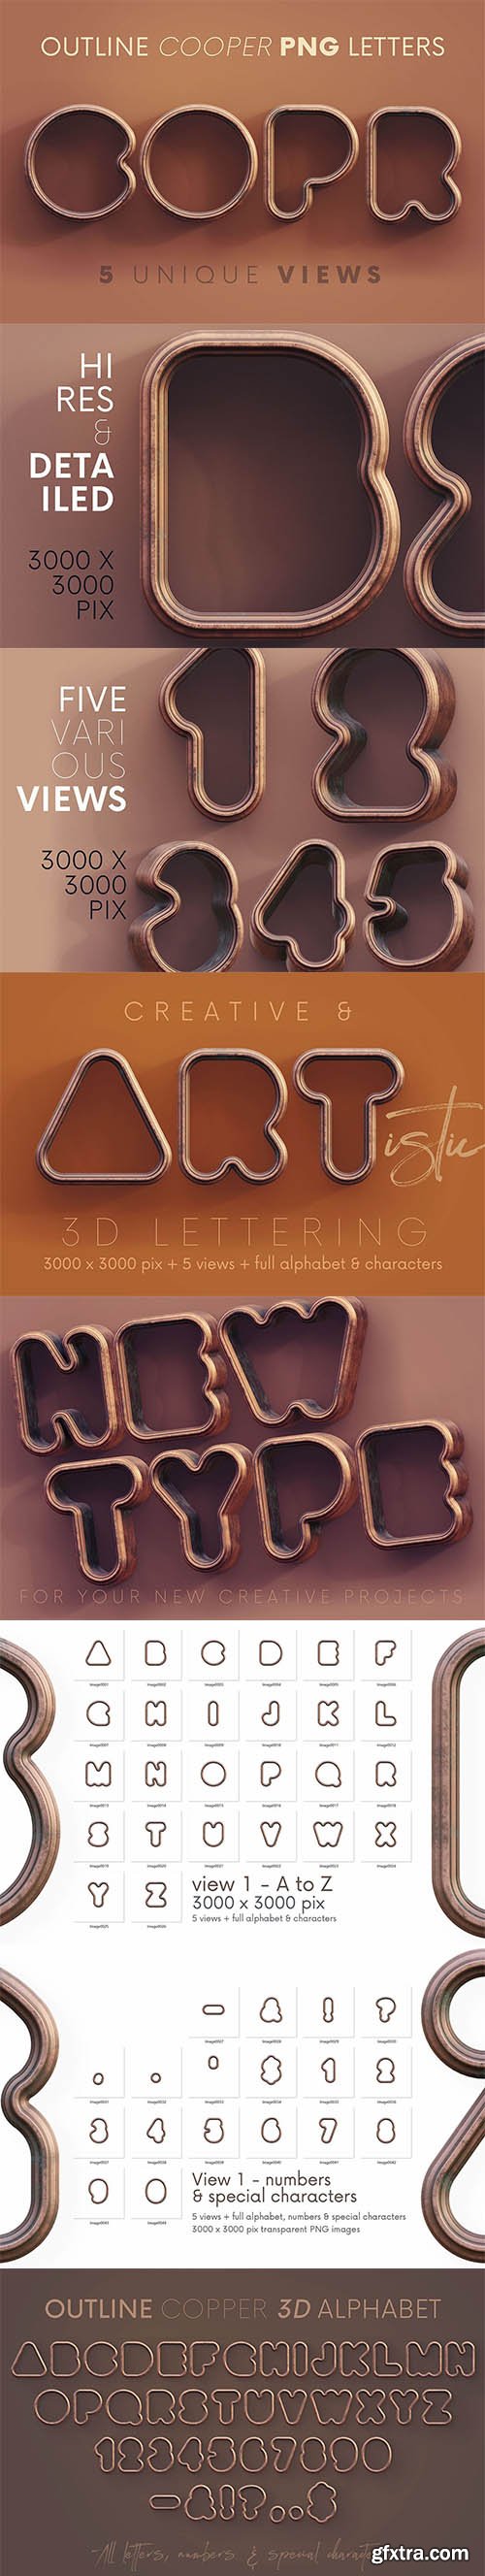 CreativeMarket - Outline Cooper - 3D Lettering 7255585